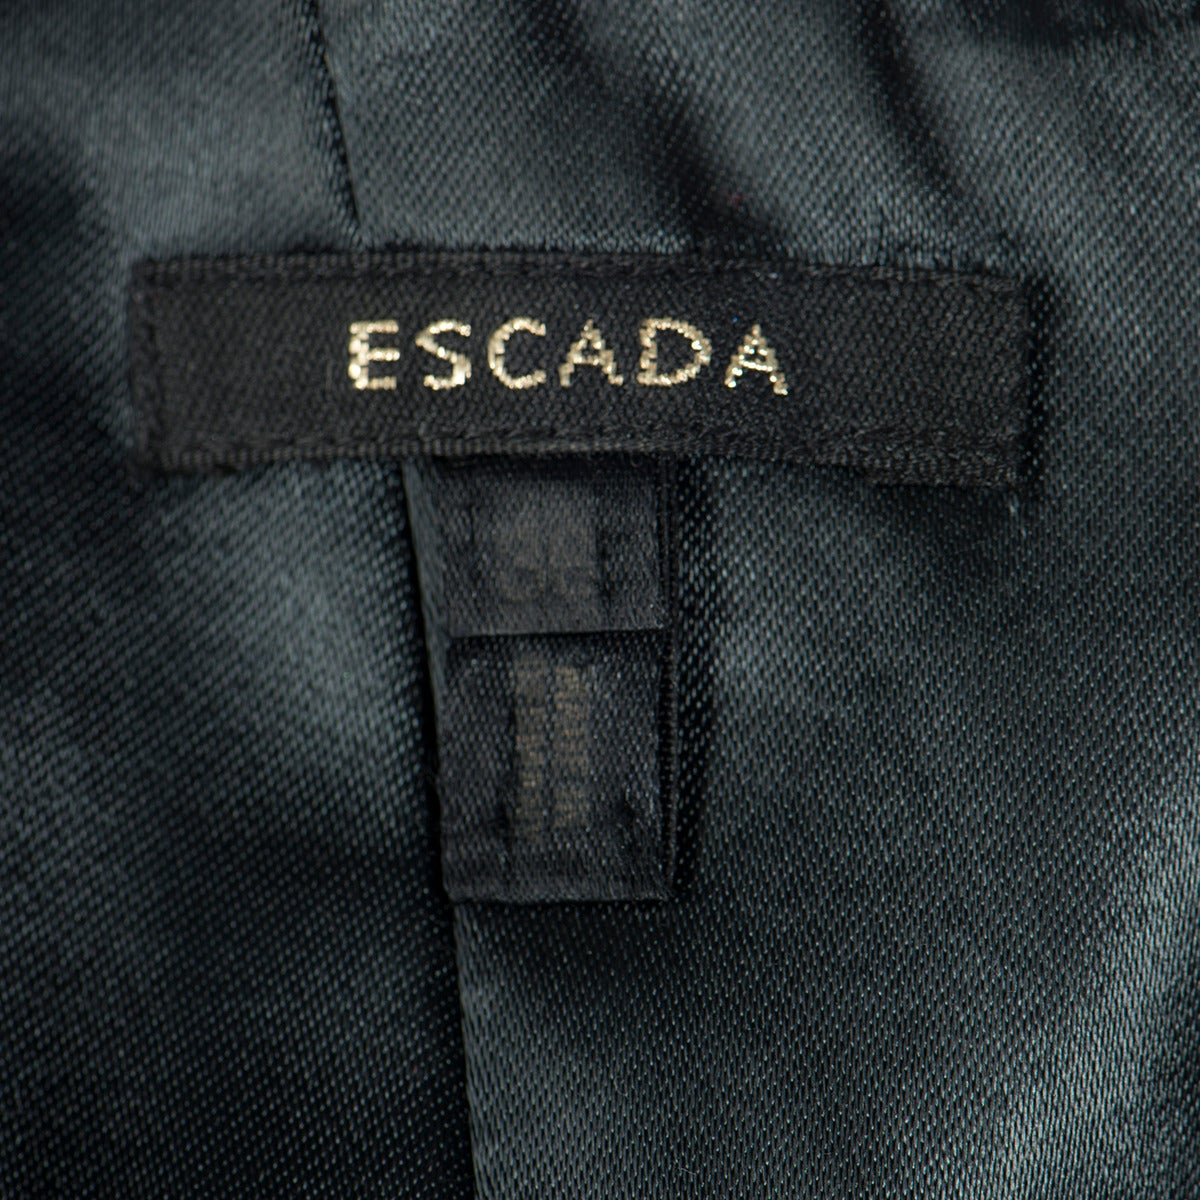 Women's Escada Black Wool Top and Skirt Suit